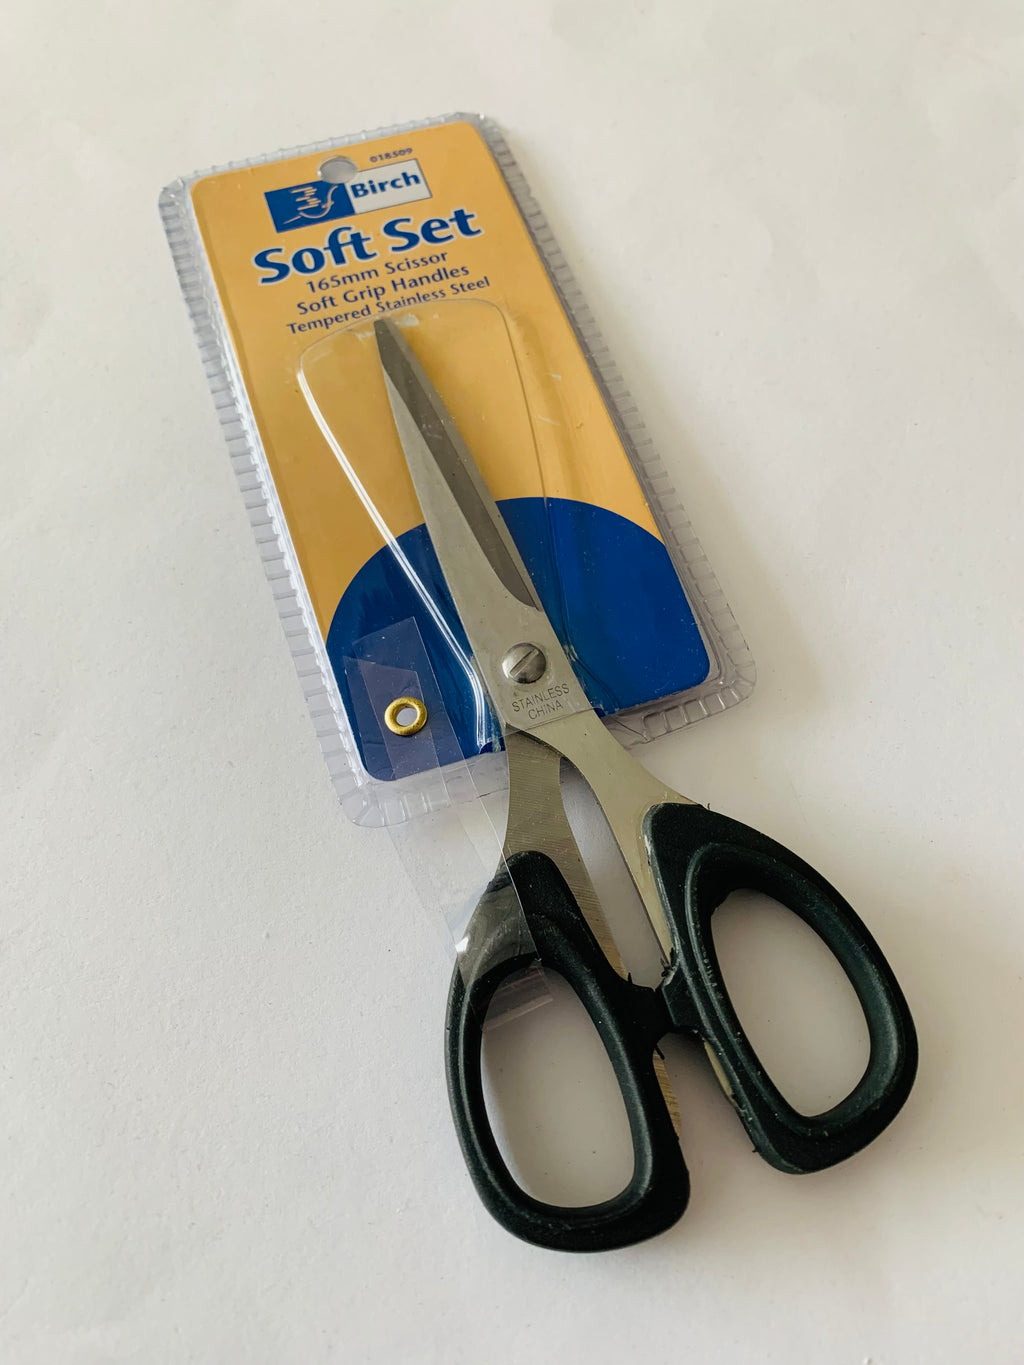 Birch Soft Set Scissor/ 165mm